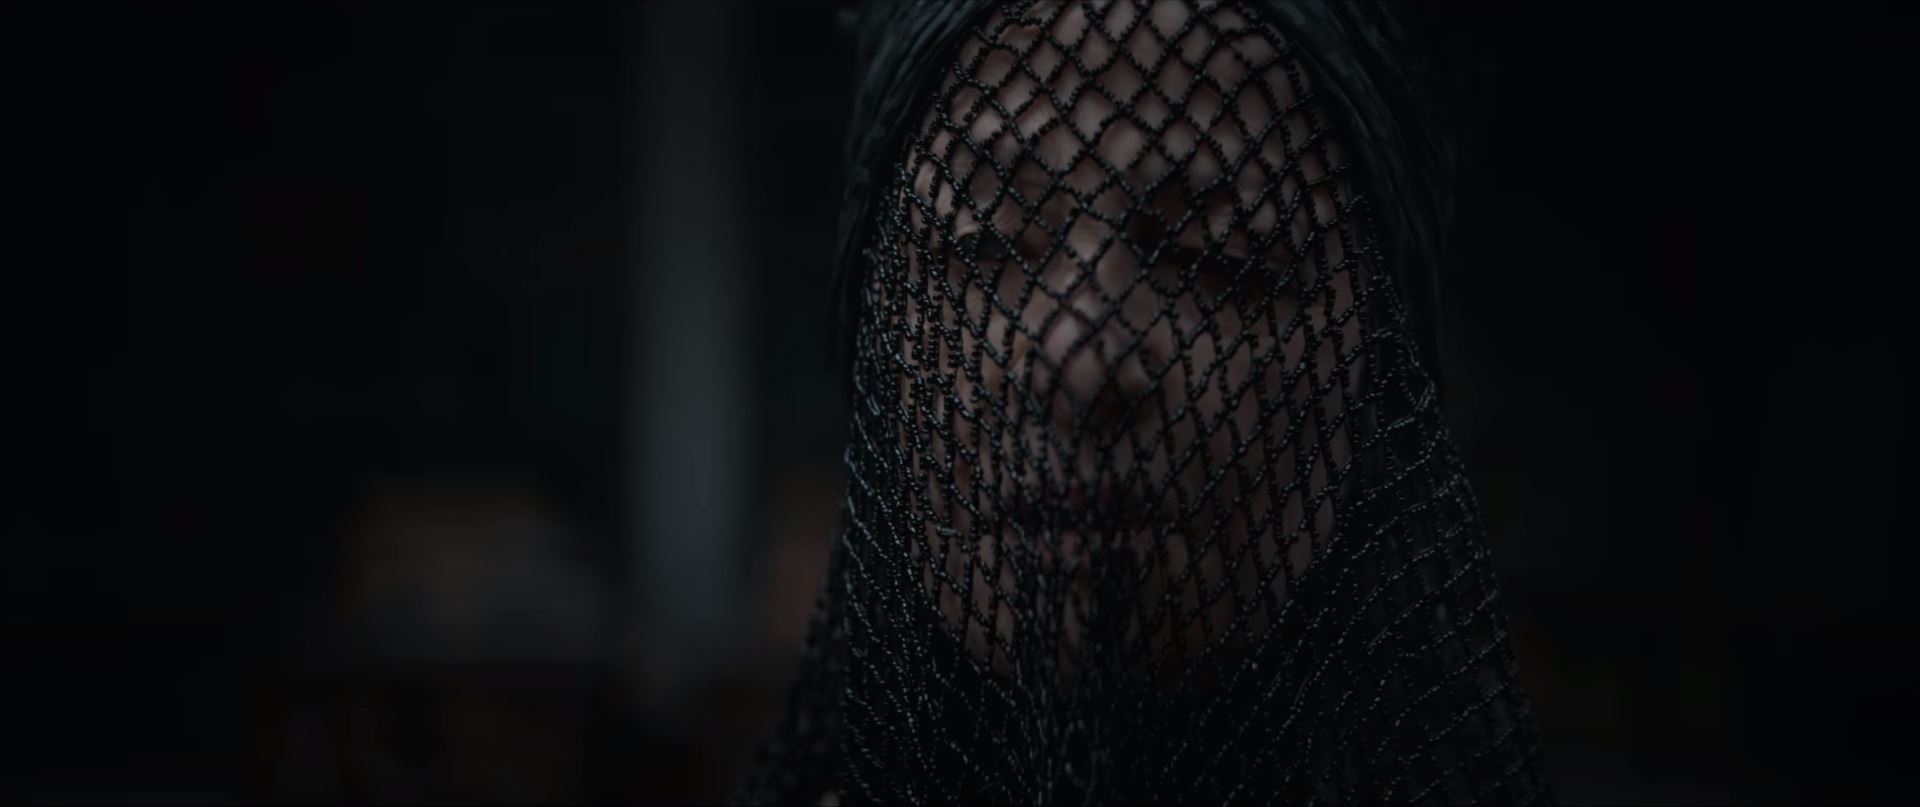 Dune movie trailer Charlotte Rampling as Gaius Helen Mohiam